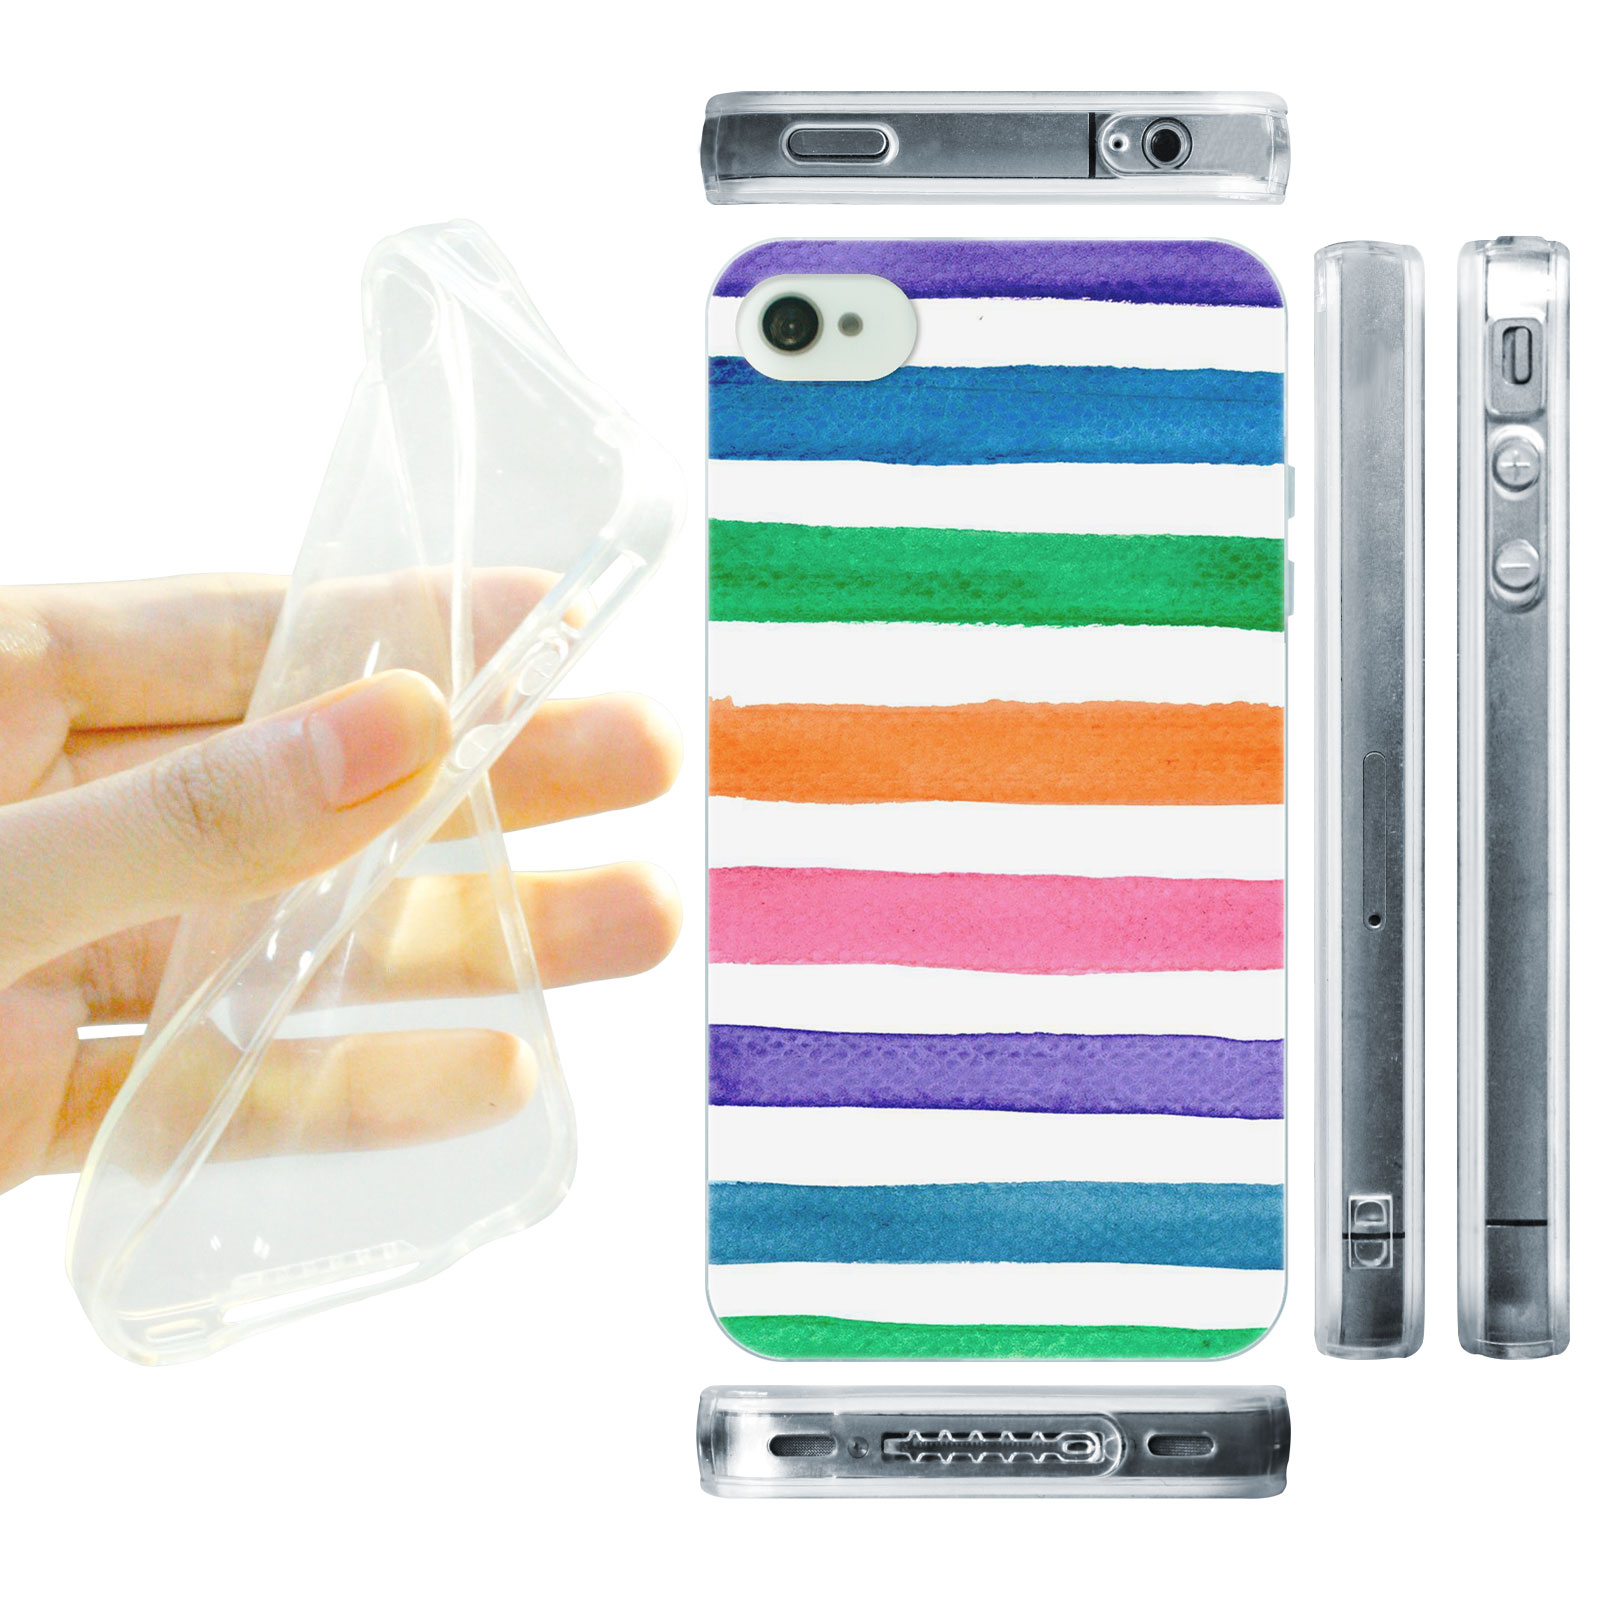 HEAD CASE silikonový obal na mobil Iphone 4/4S Vzor barevné pruhy barevná kombinace duha